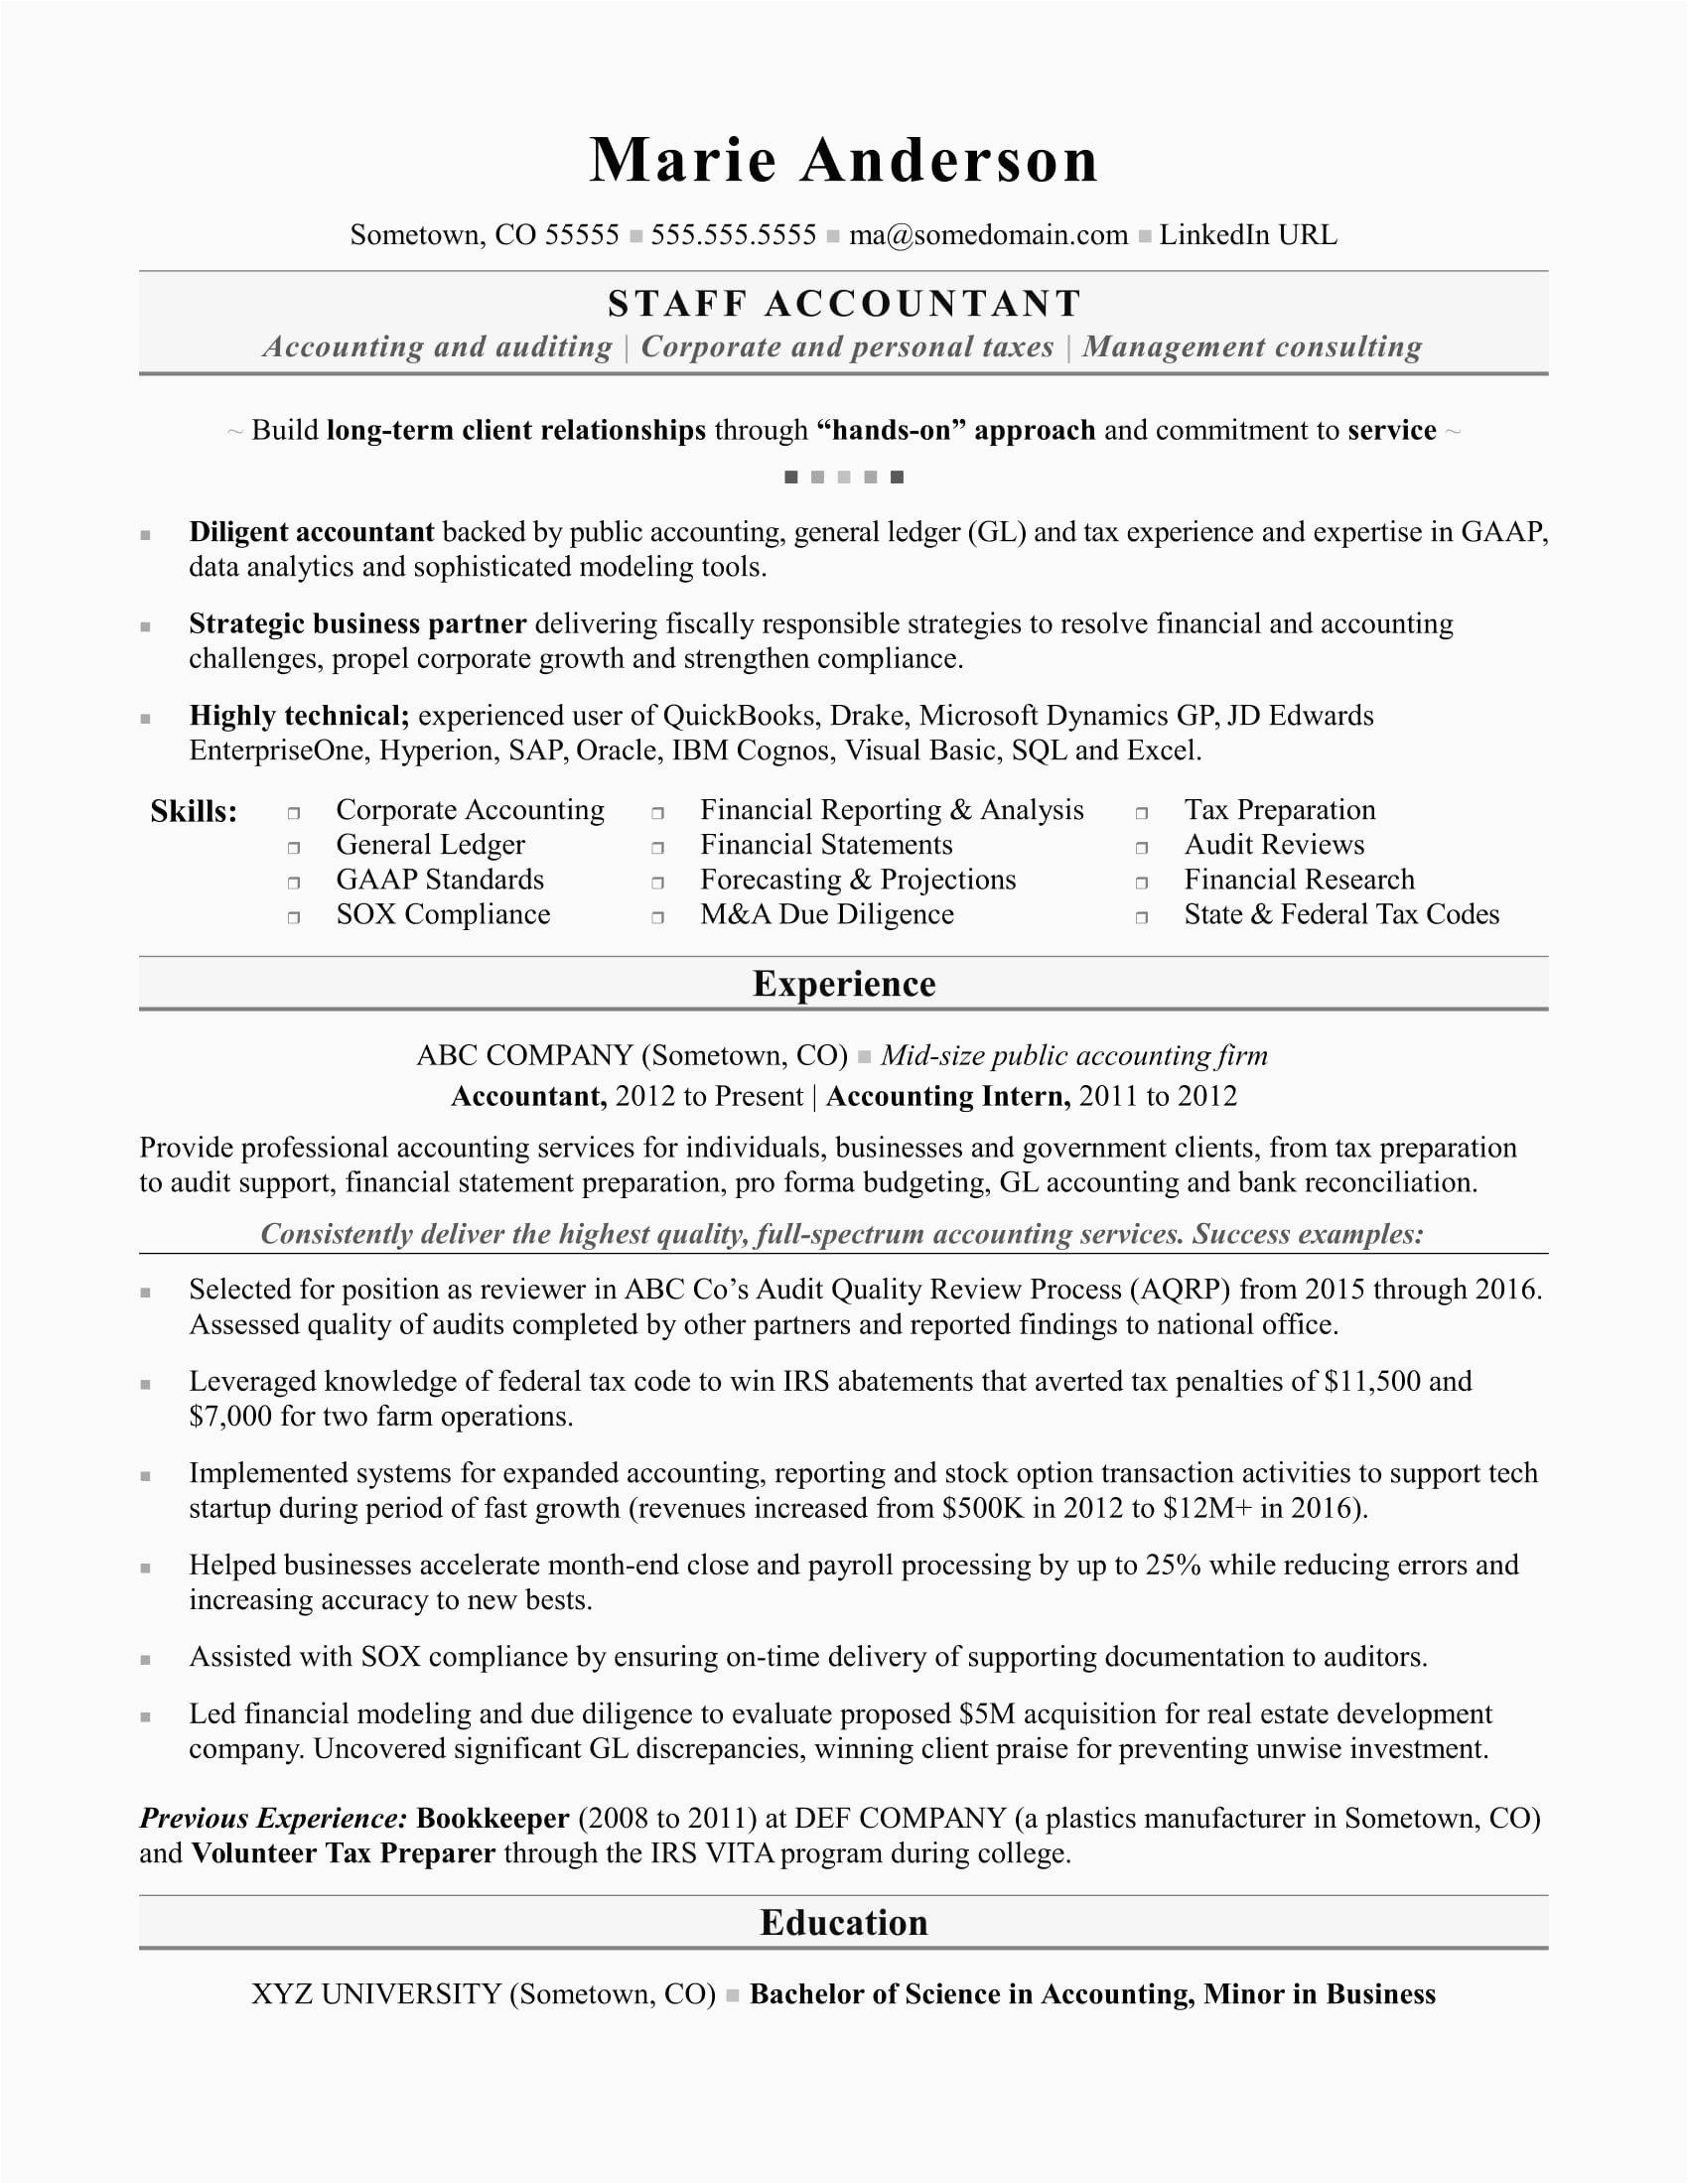 Sample Resume for General Ledger Accountant √ 20 General Ledger Accountant Resume